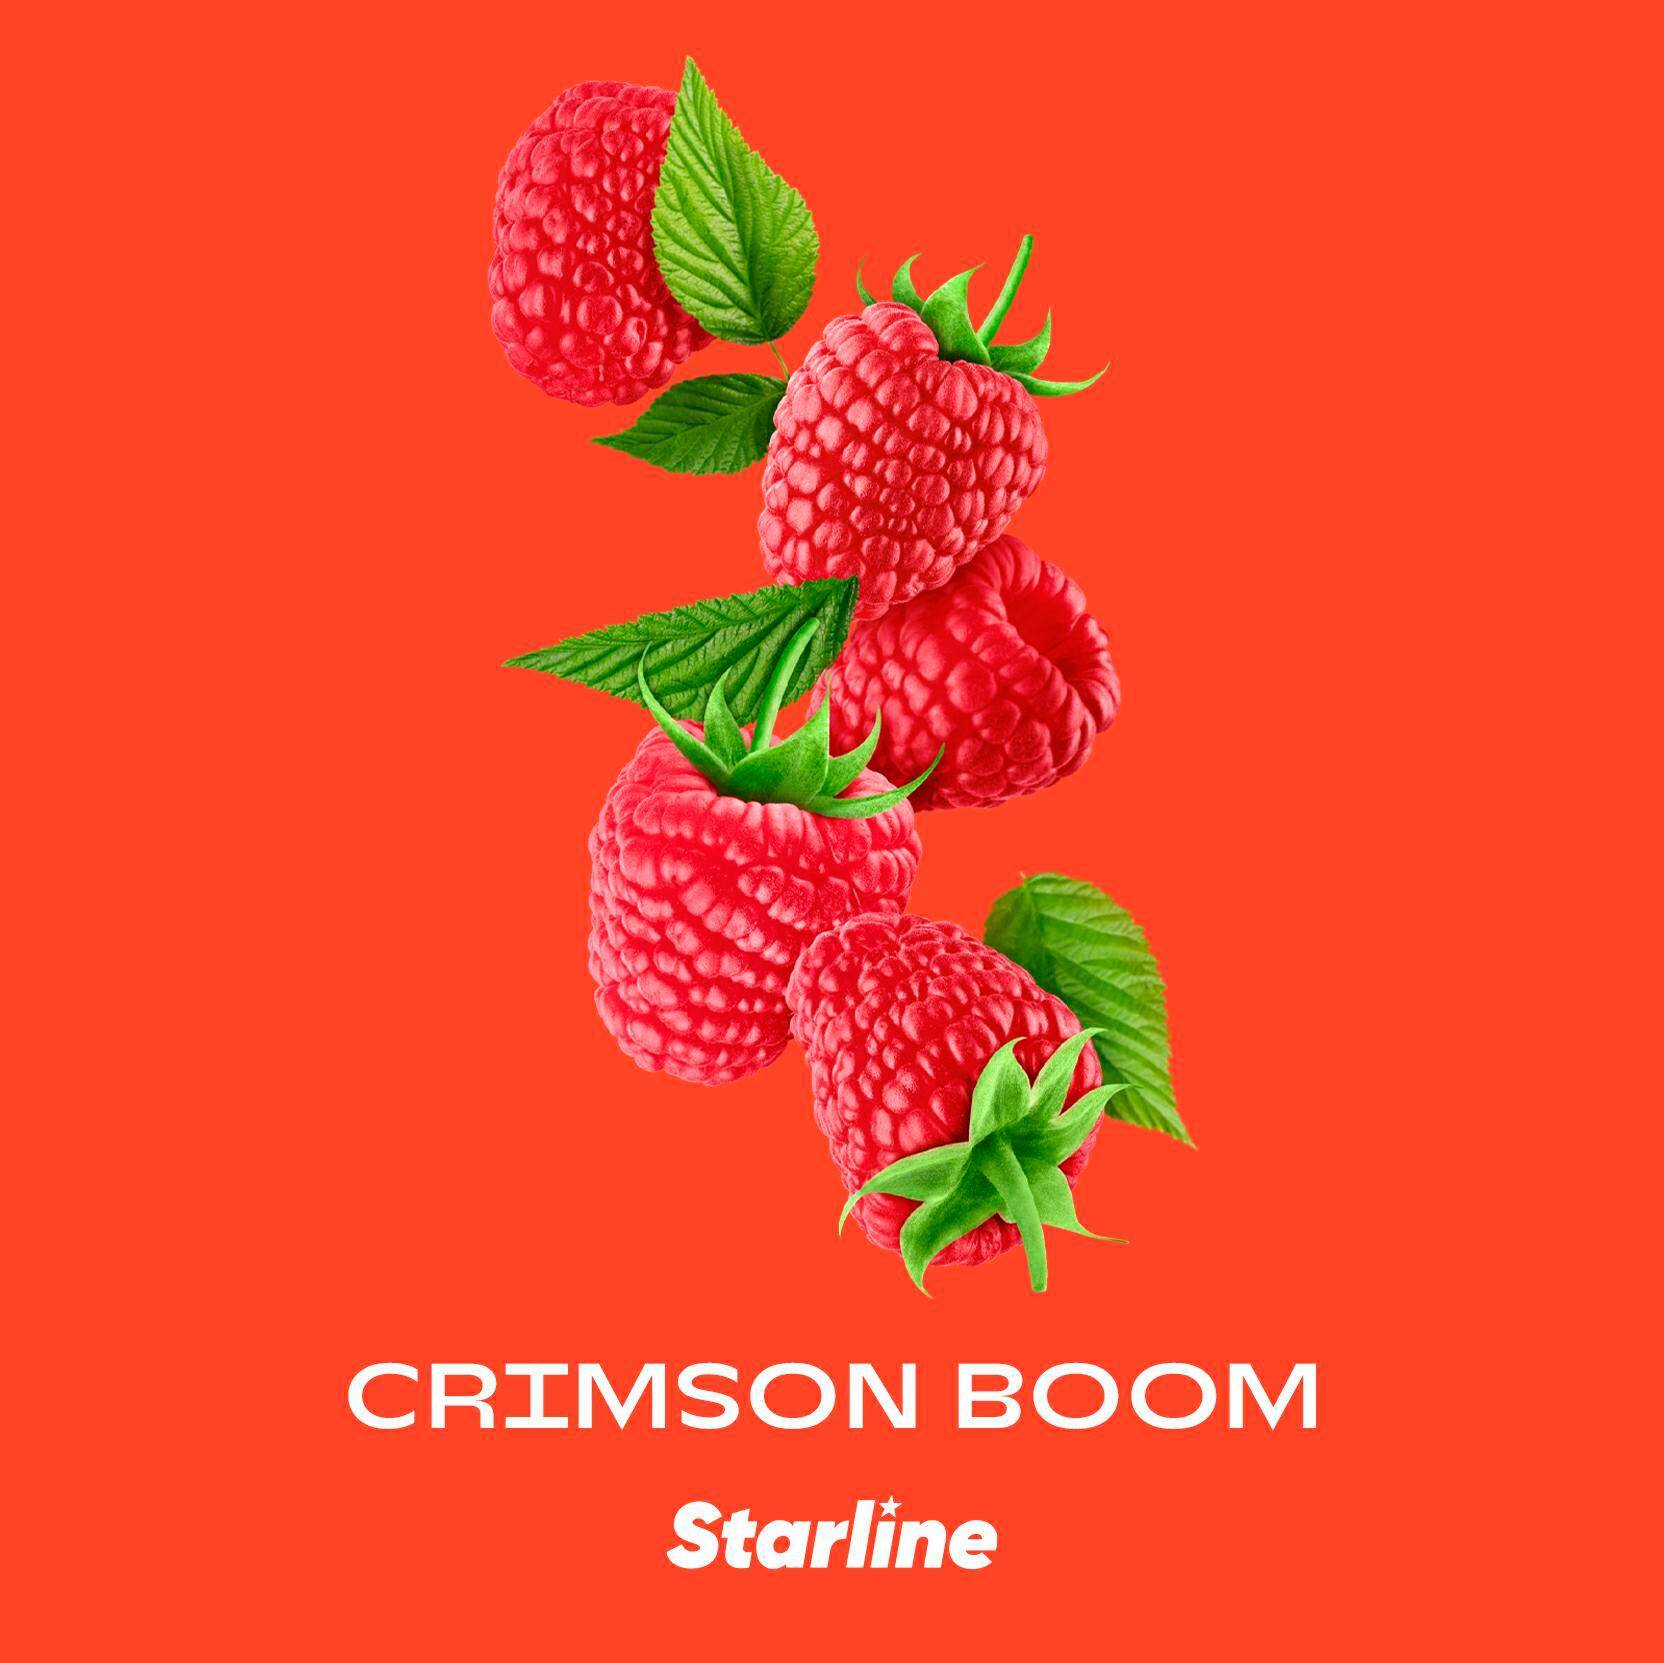 Tytoń STARLINE Chrimson Boom 200g (190